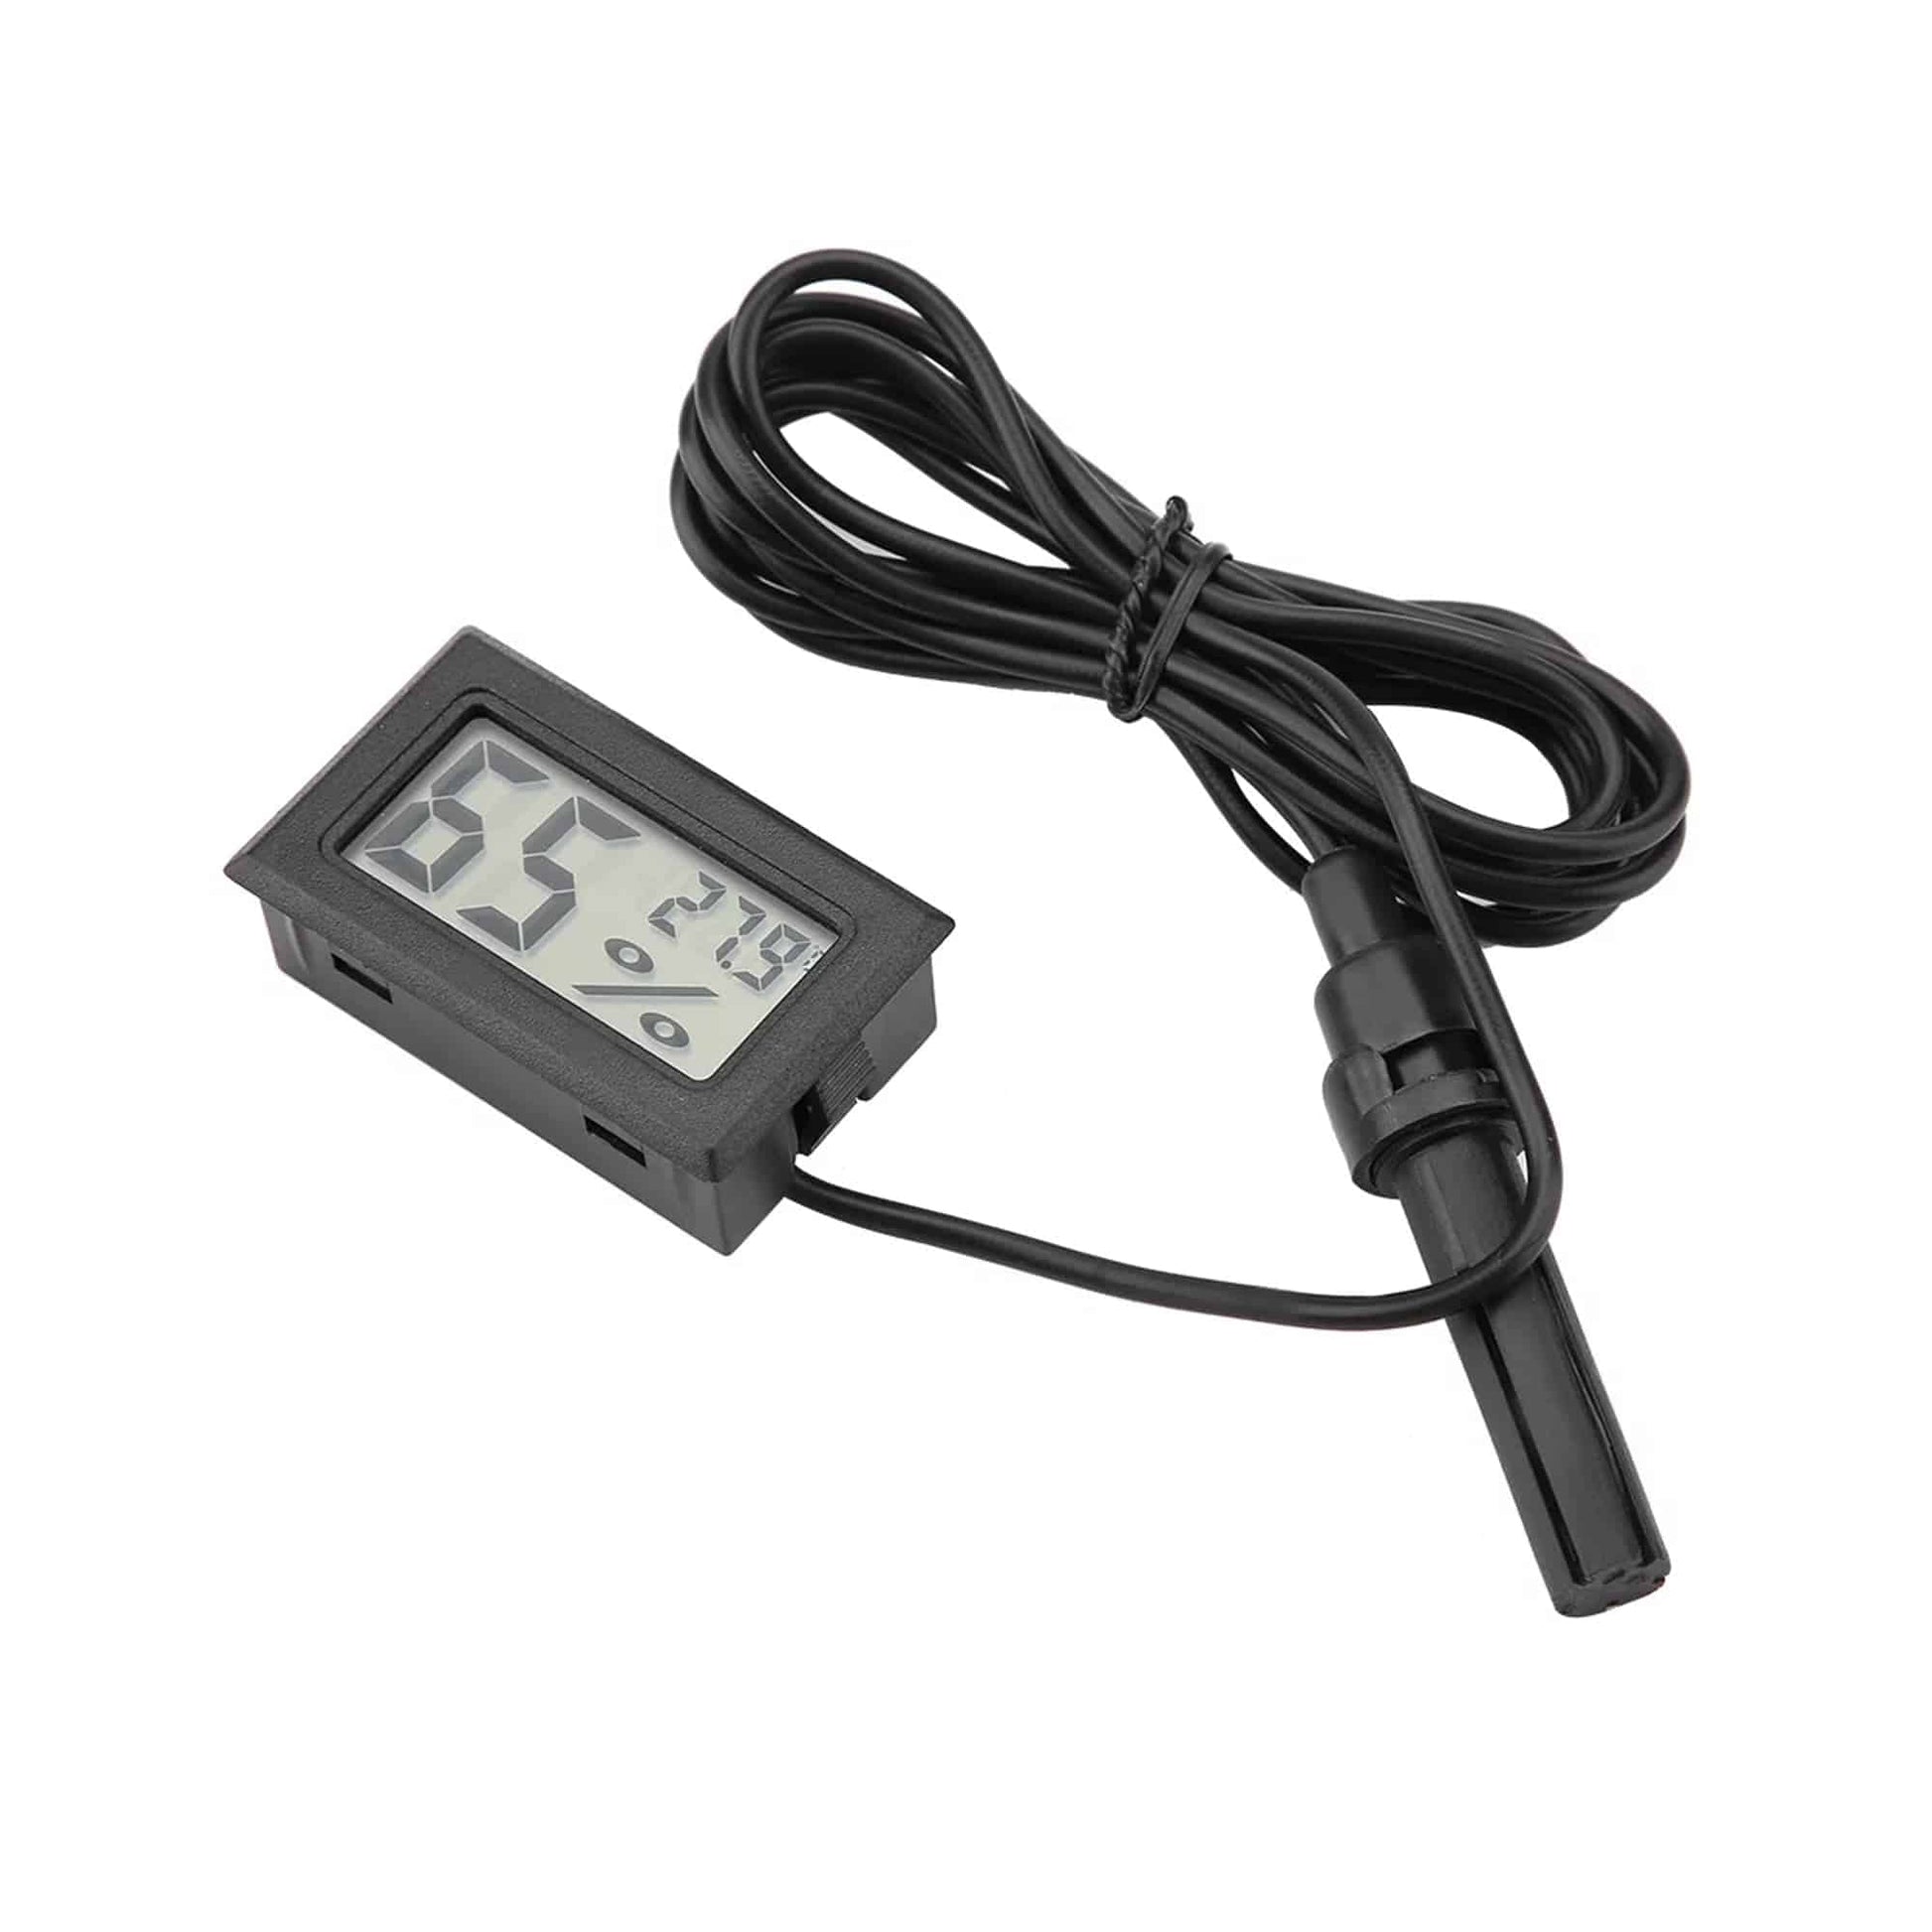 FY-12 Digital Thermometer Hygrometer Mini LCD